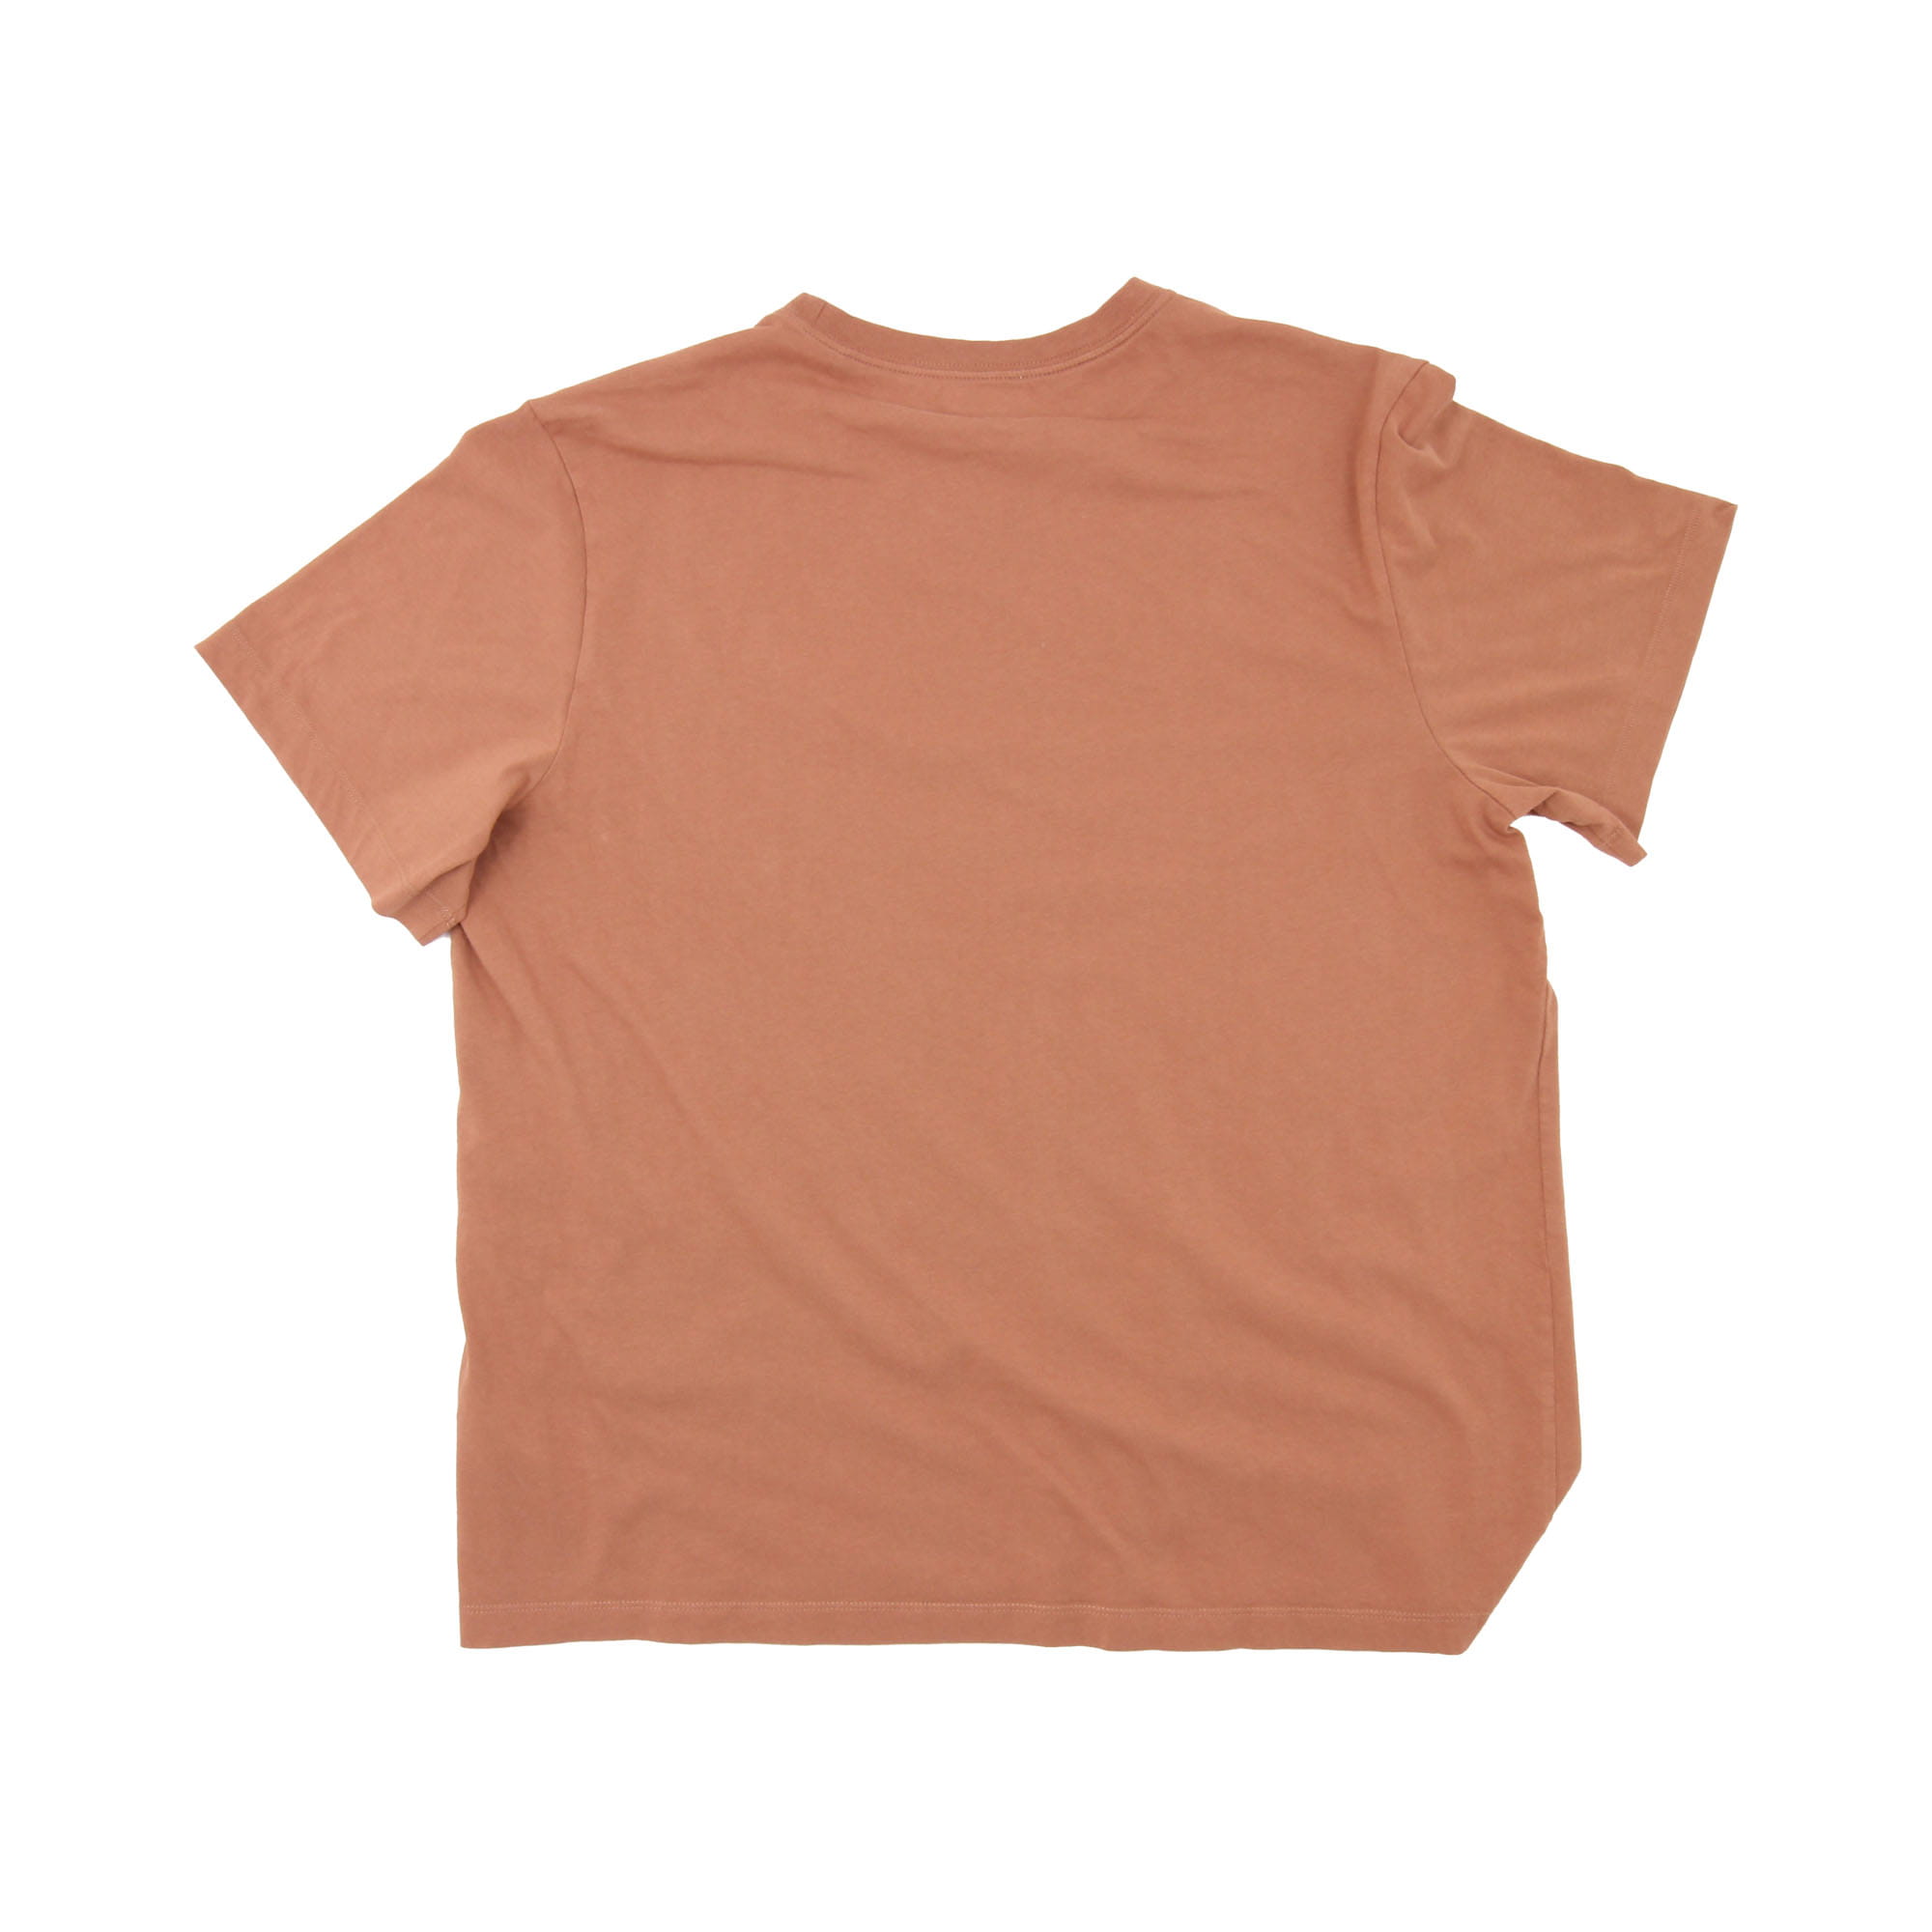 Nike T-Shirt Brown -  L